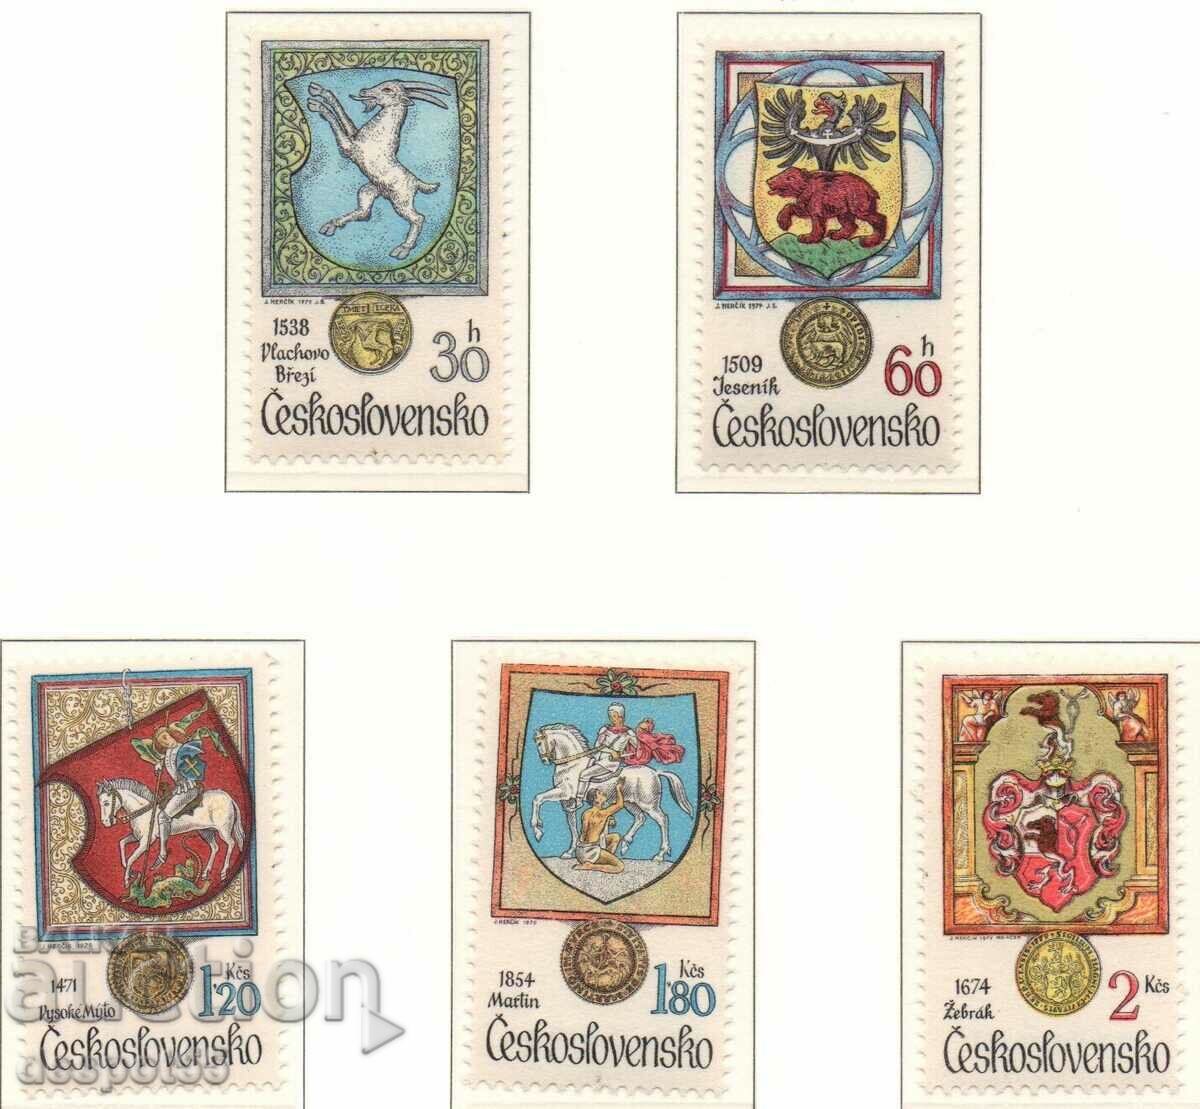 1979. Czechoslovakia. Animals in heraldry.